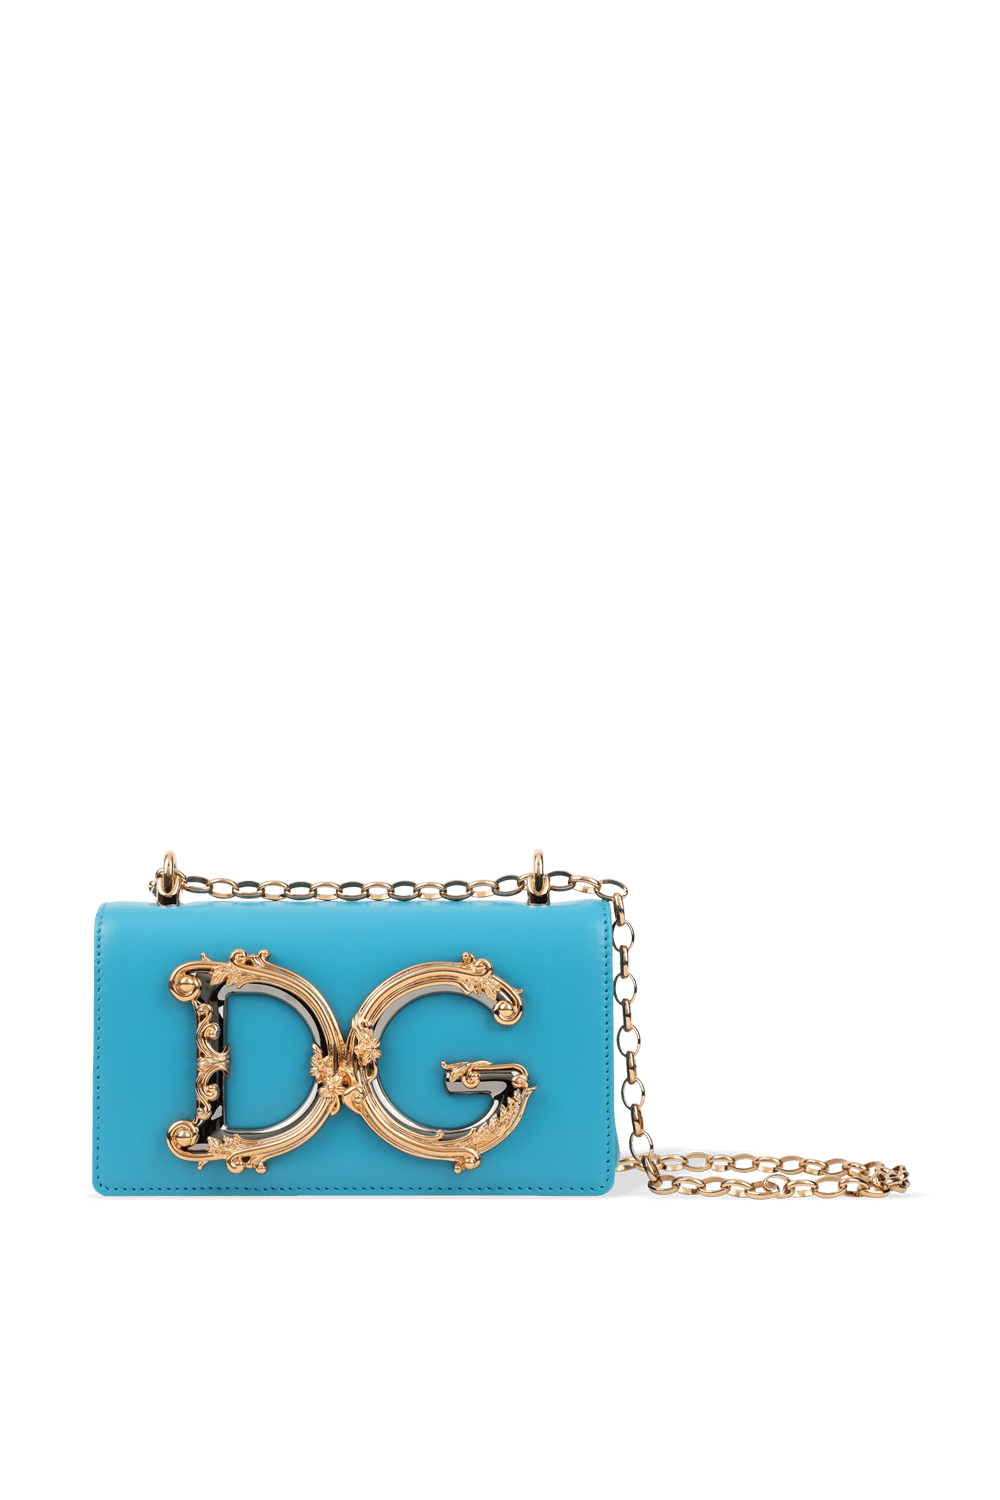 DG Girls phone bag in Light Blue Leather DOLCE & GABBANA